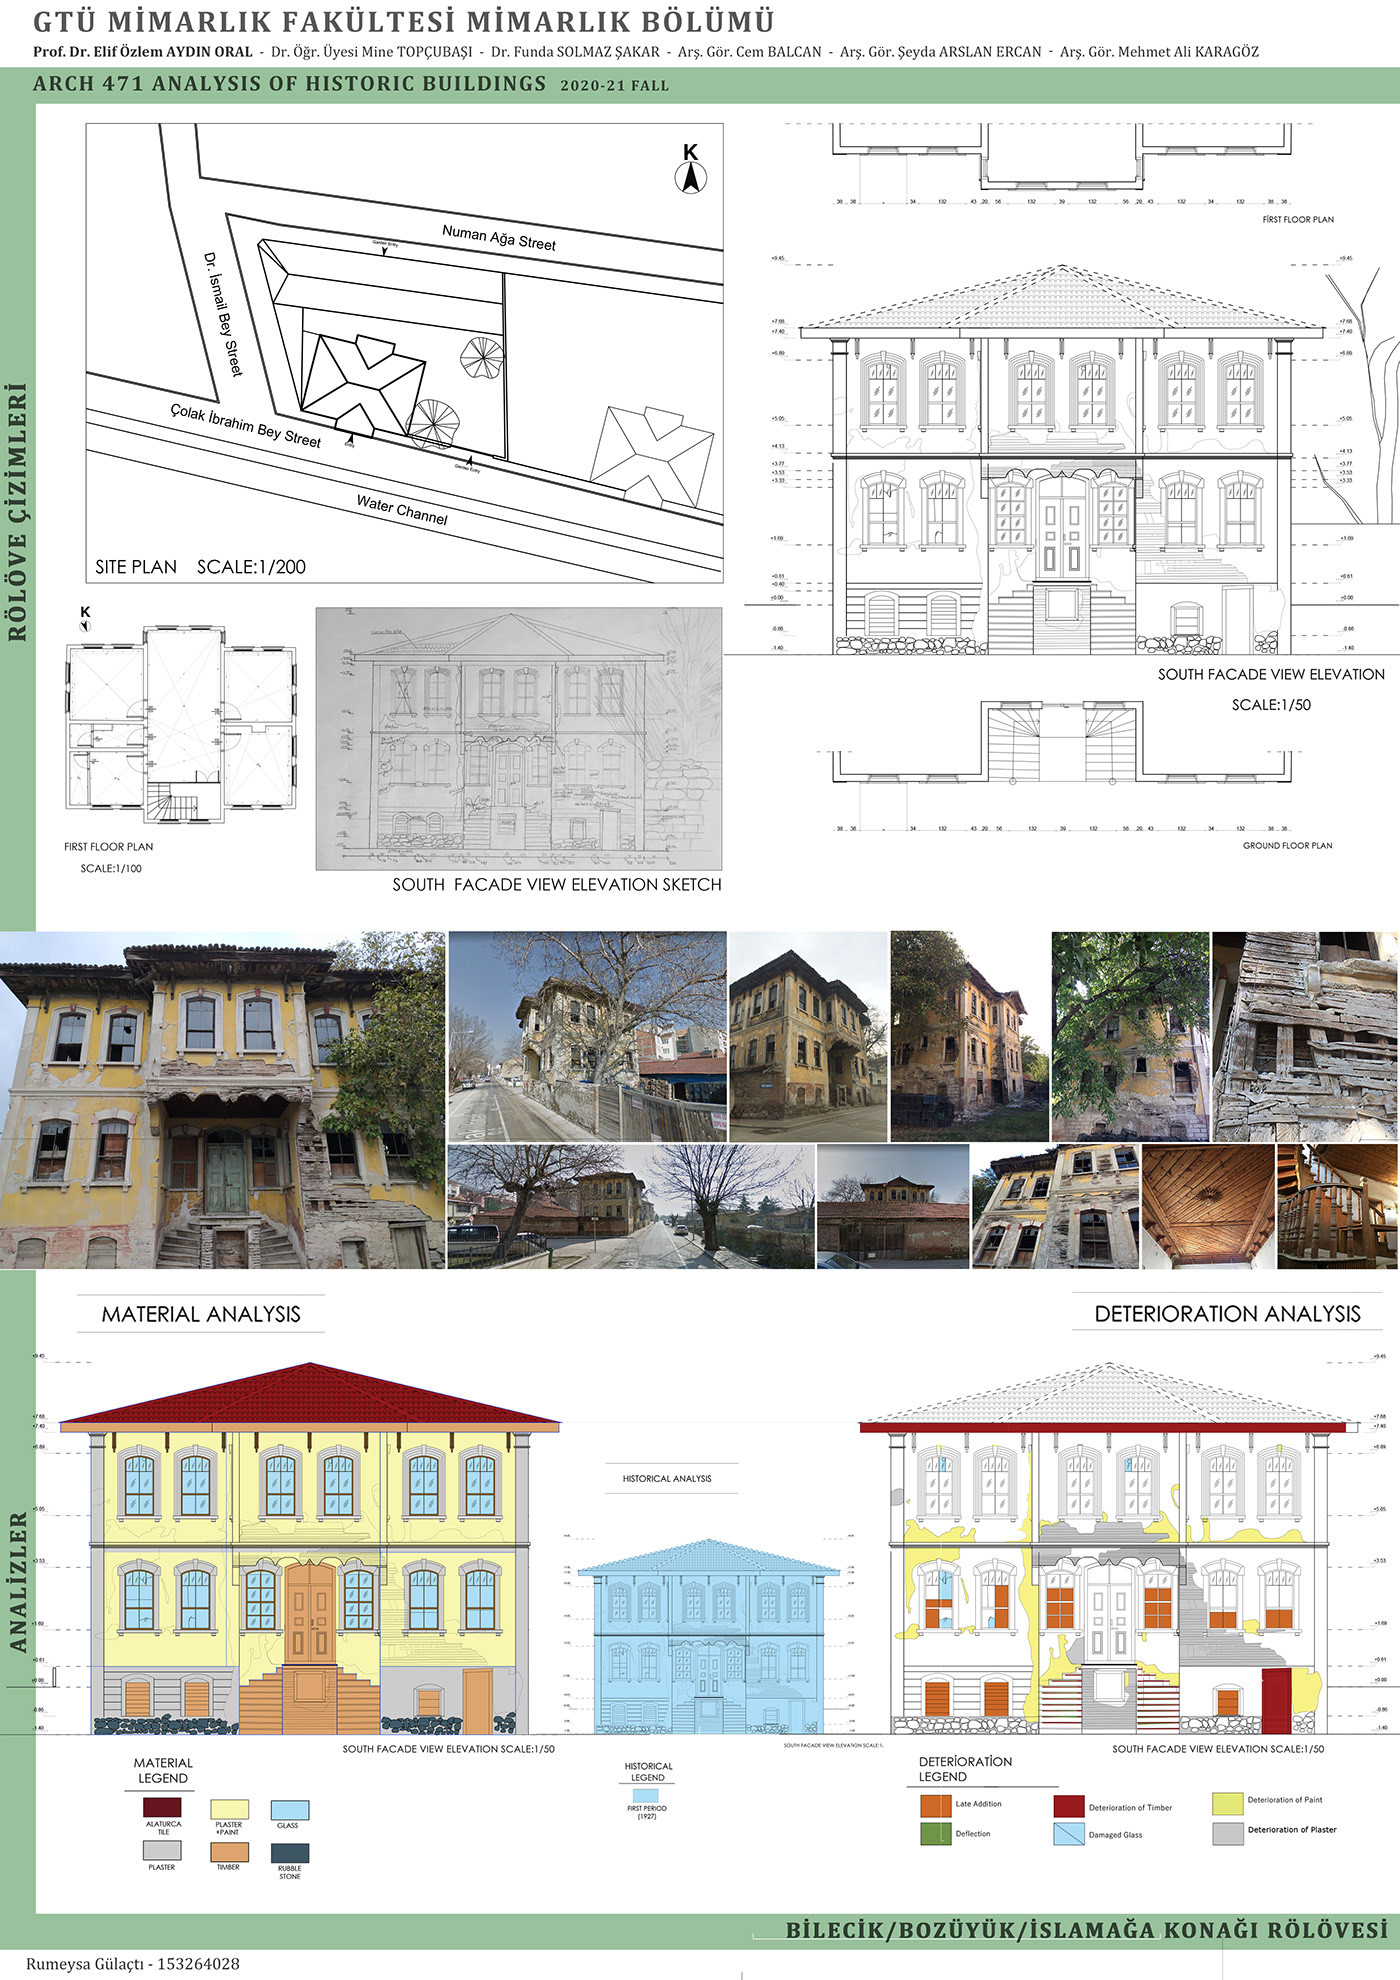 architectural survey architecture conservation Deterioration Historical Building historical classification inventory recording material restoration survey measurement